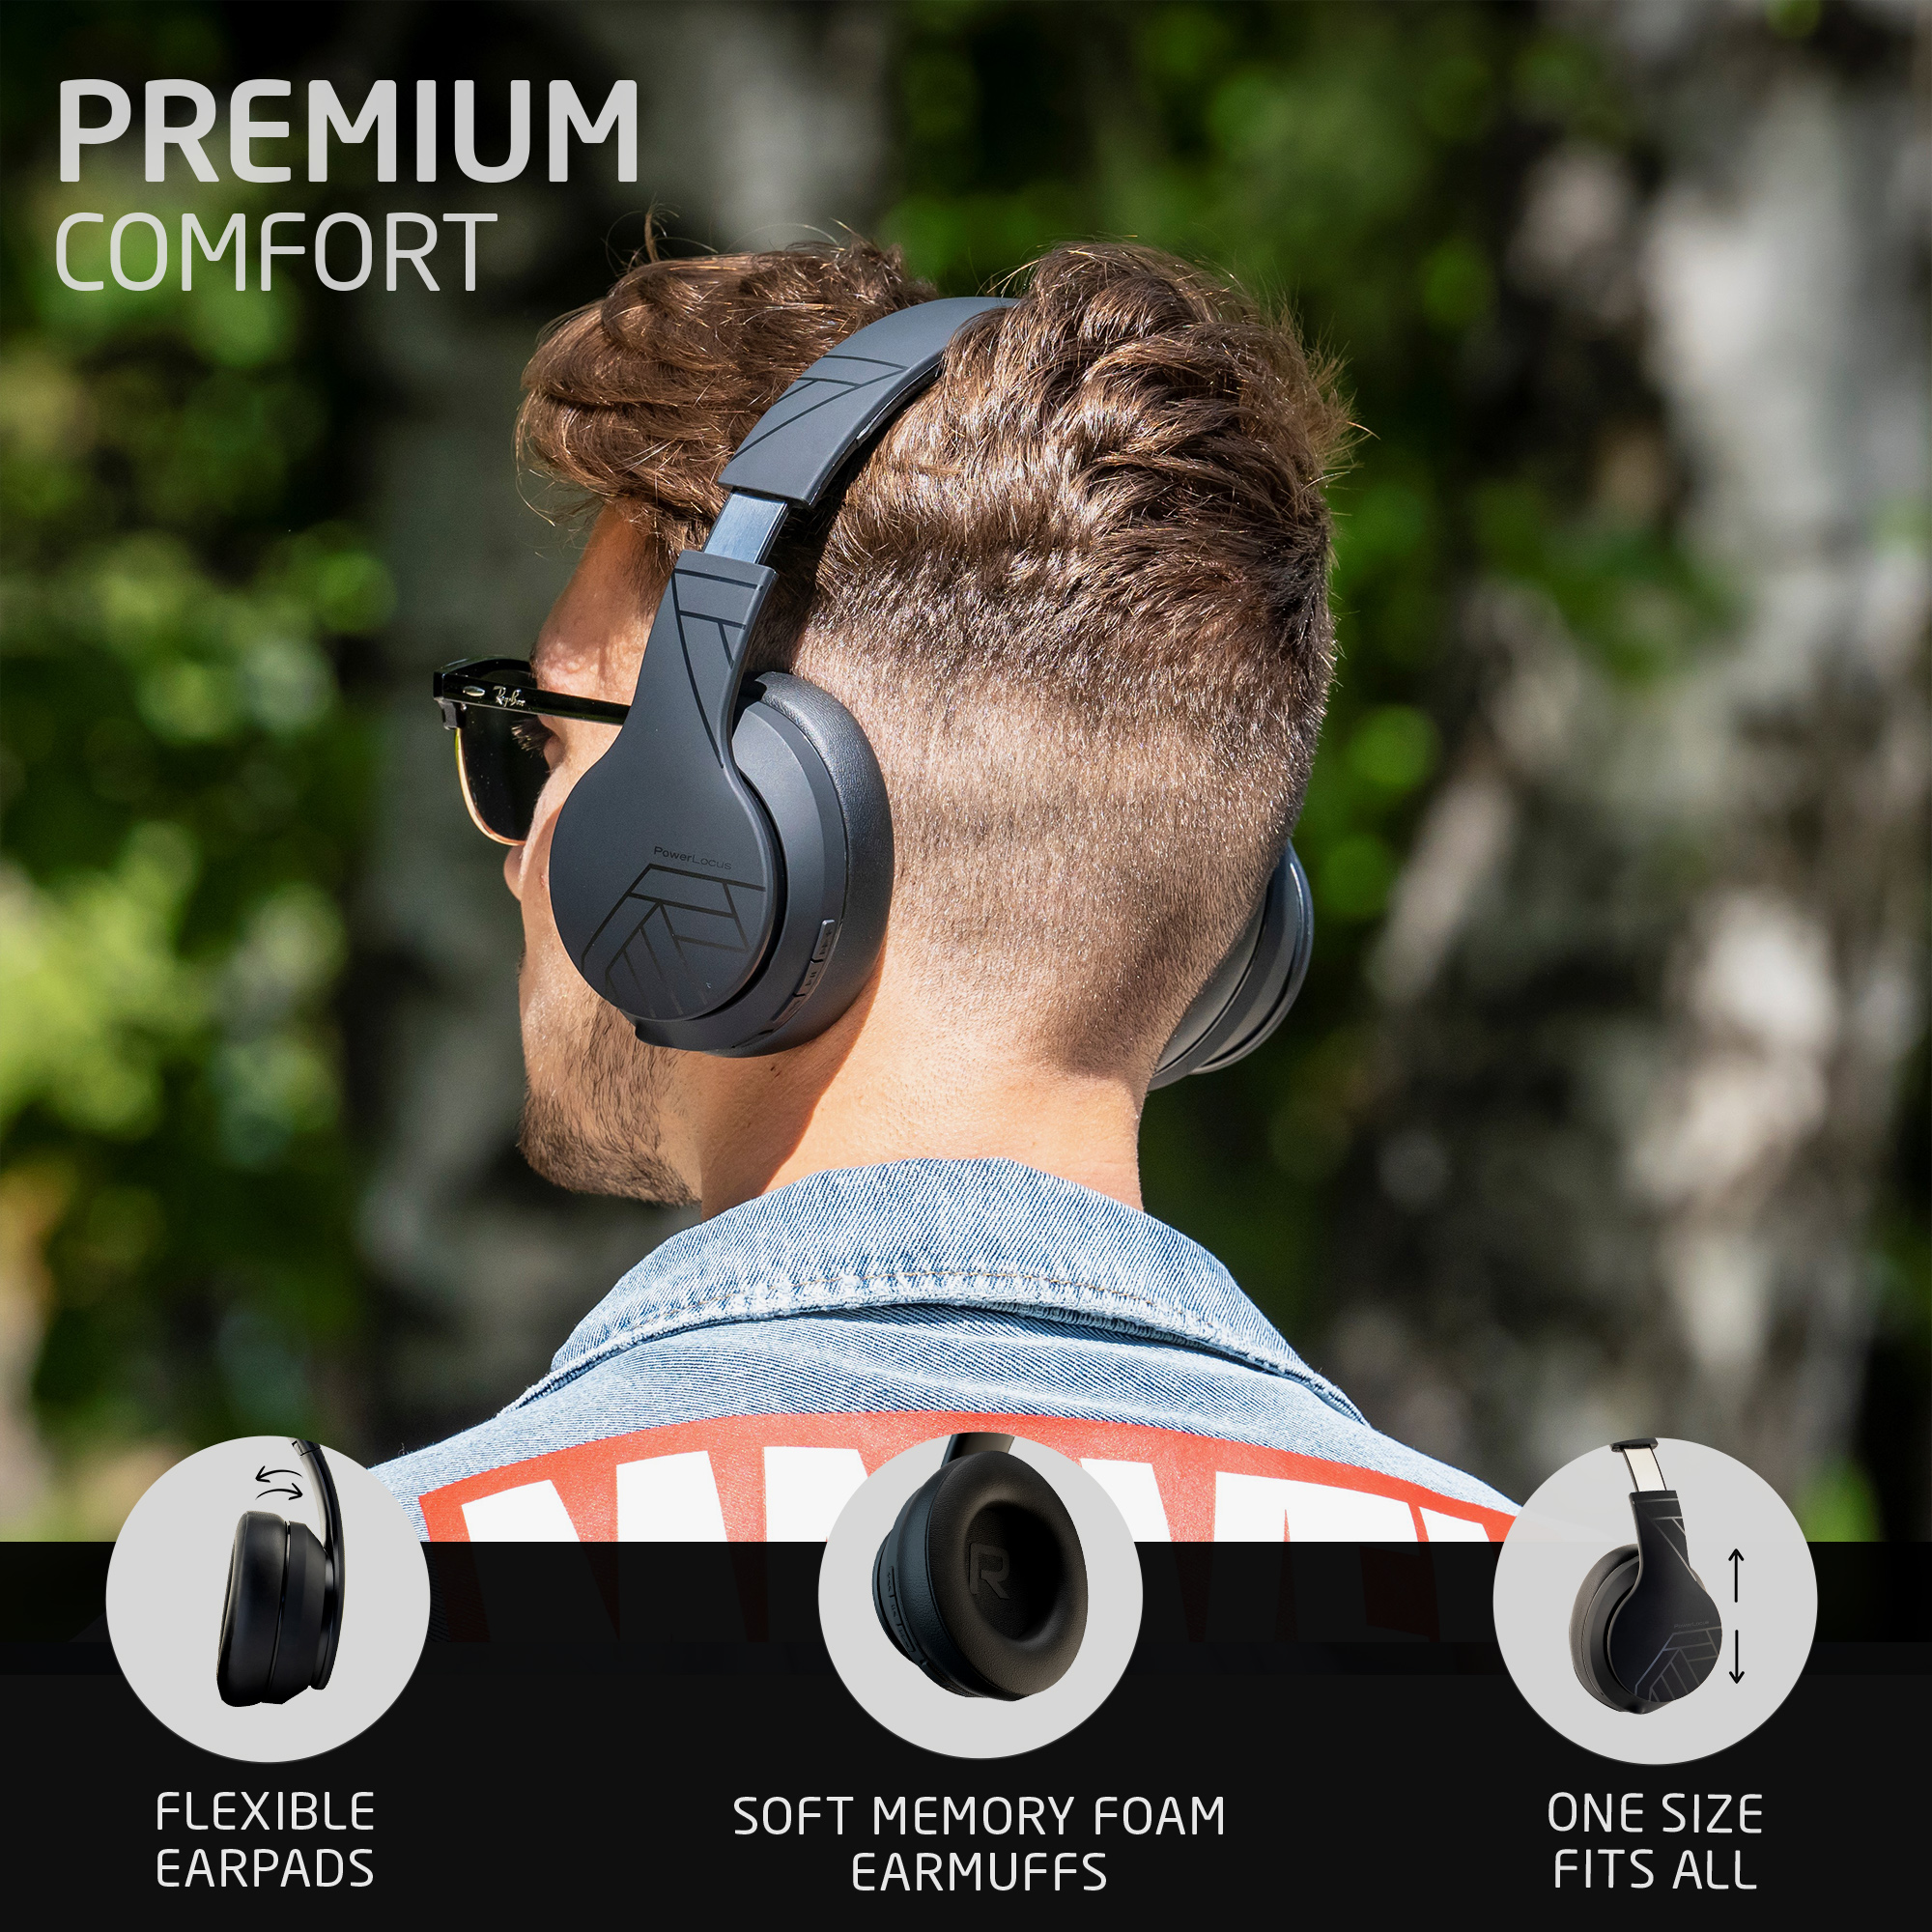 POWERLOCUS P6, Over-ear Kopfhörer Schwarz Bluetooth